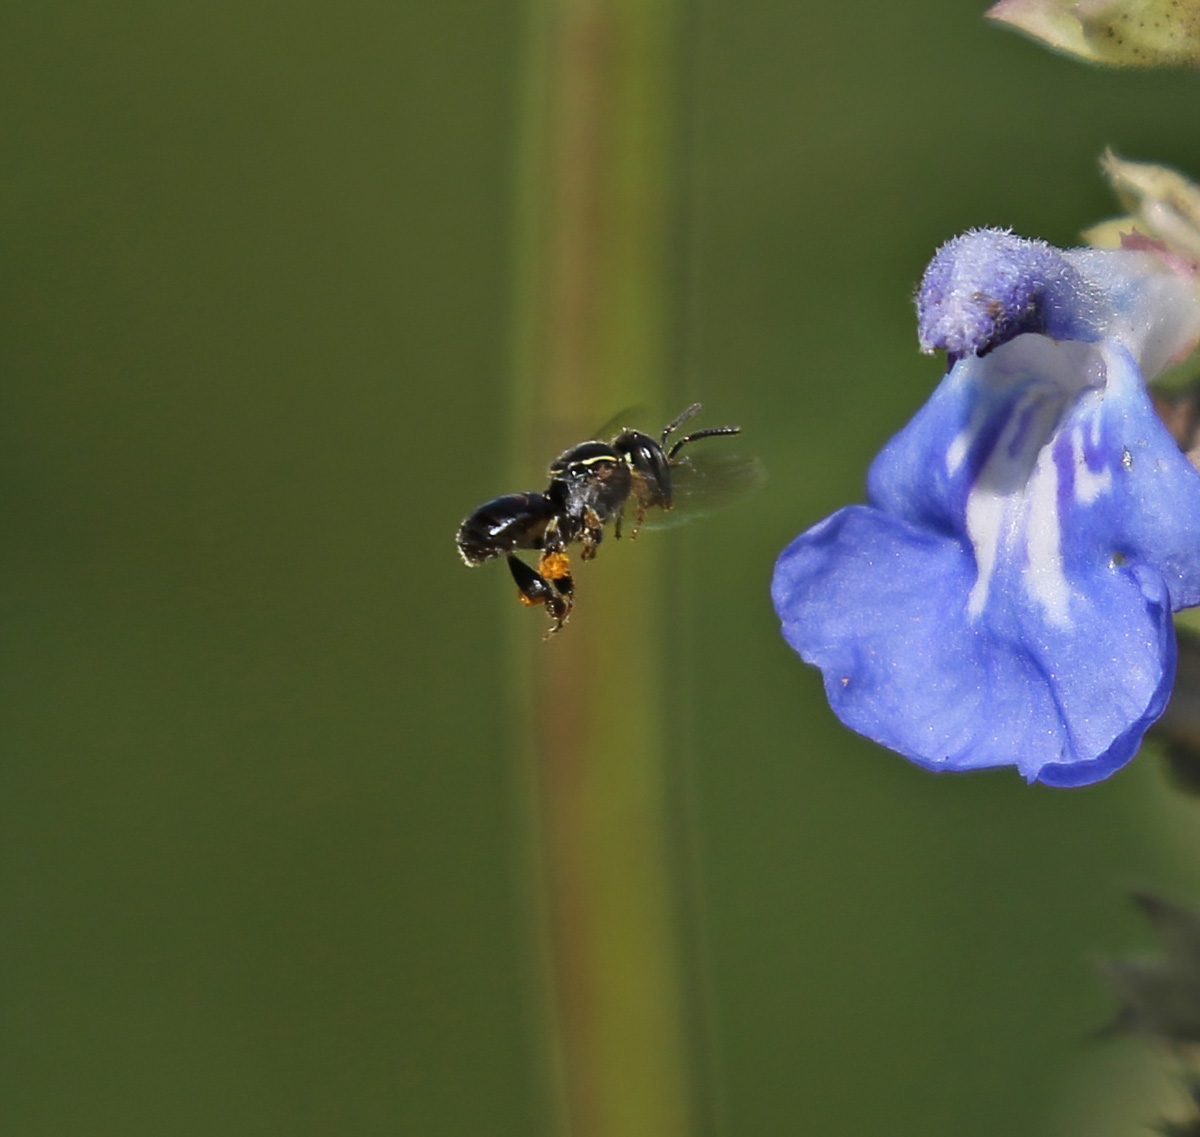 flying Plebeia emerina visits a flower